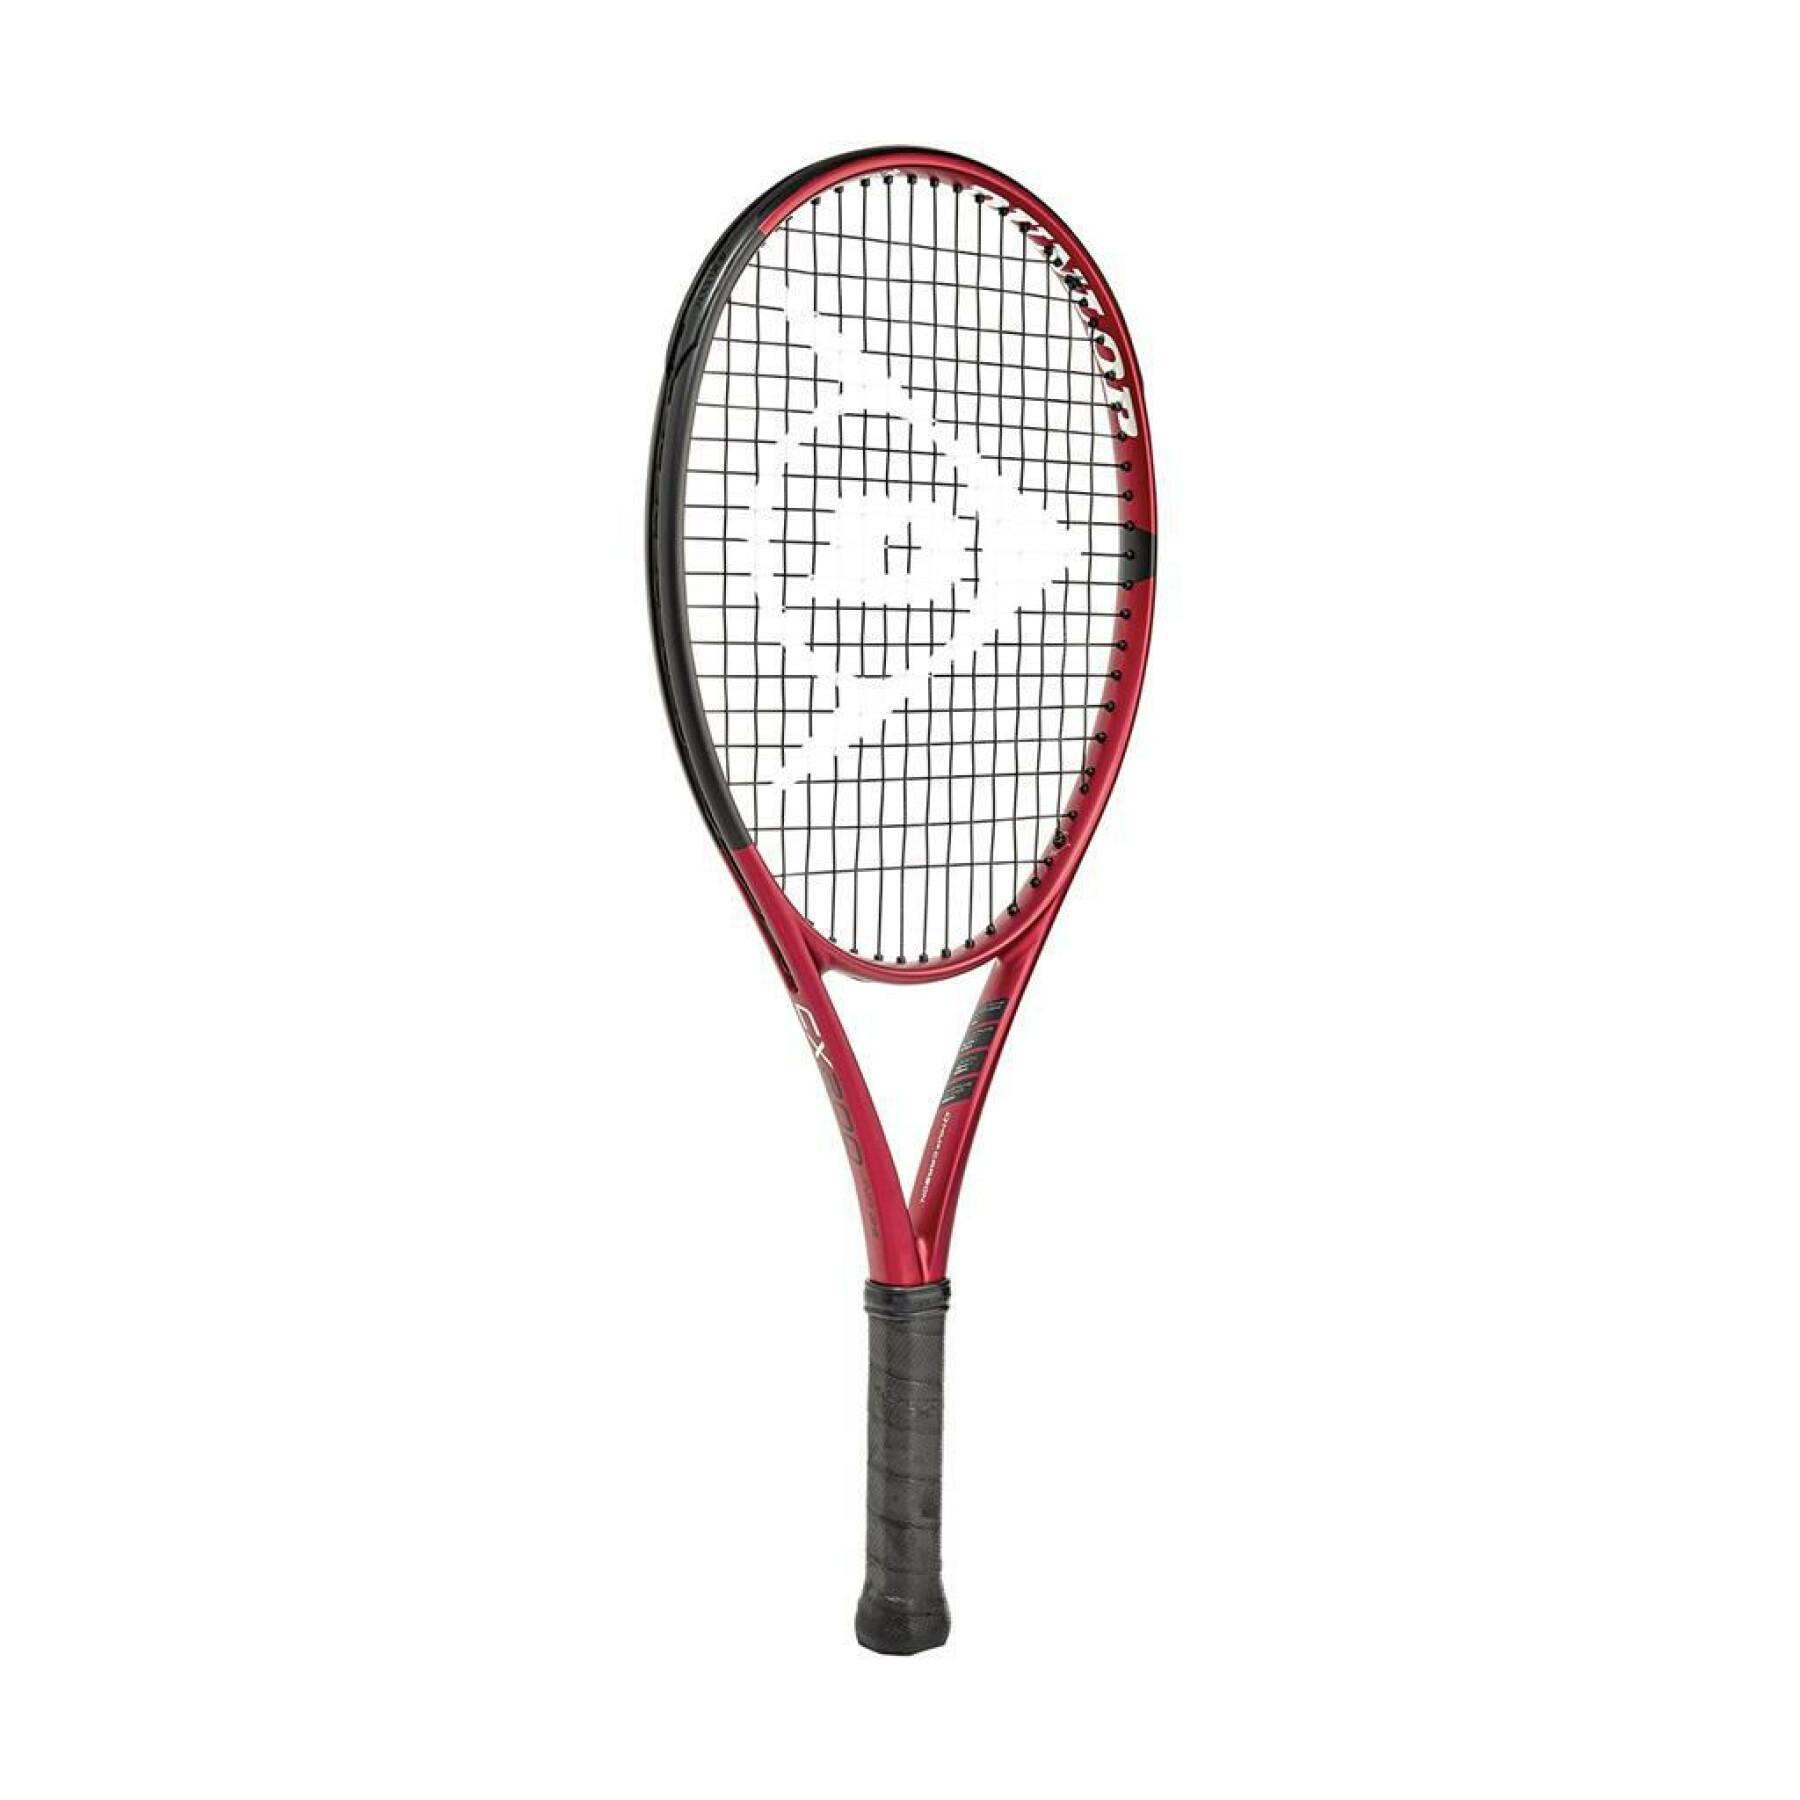 Children's racket Dunlop cx 200 25 g0